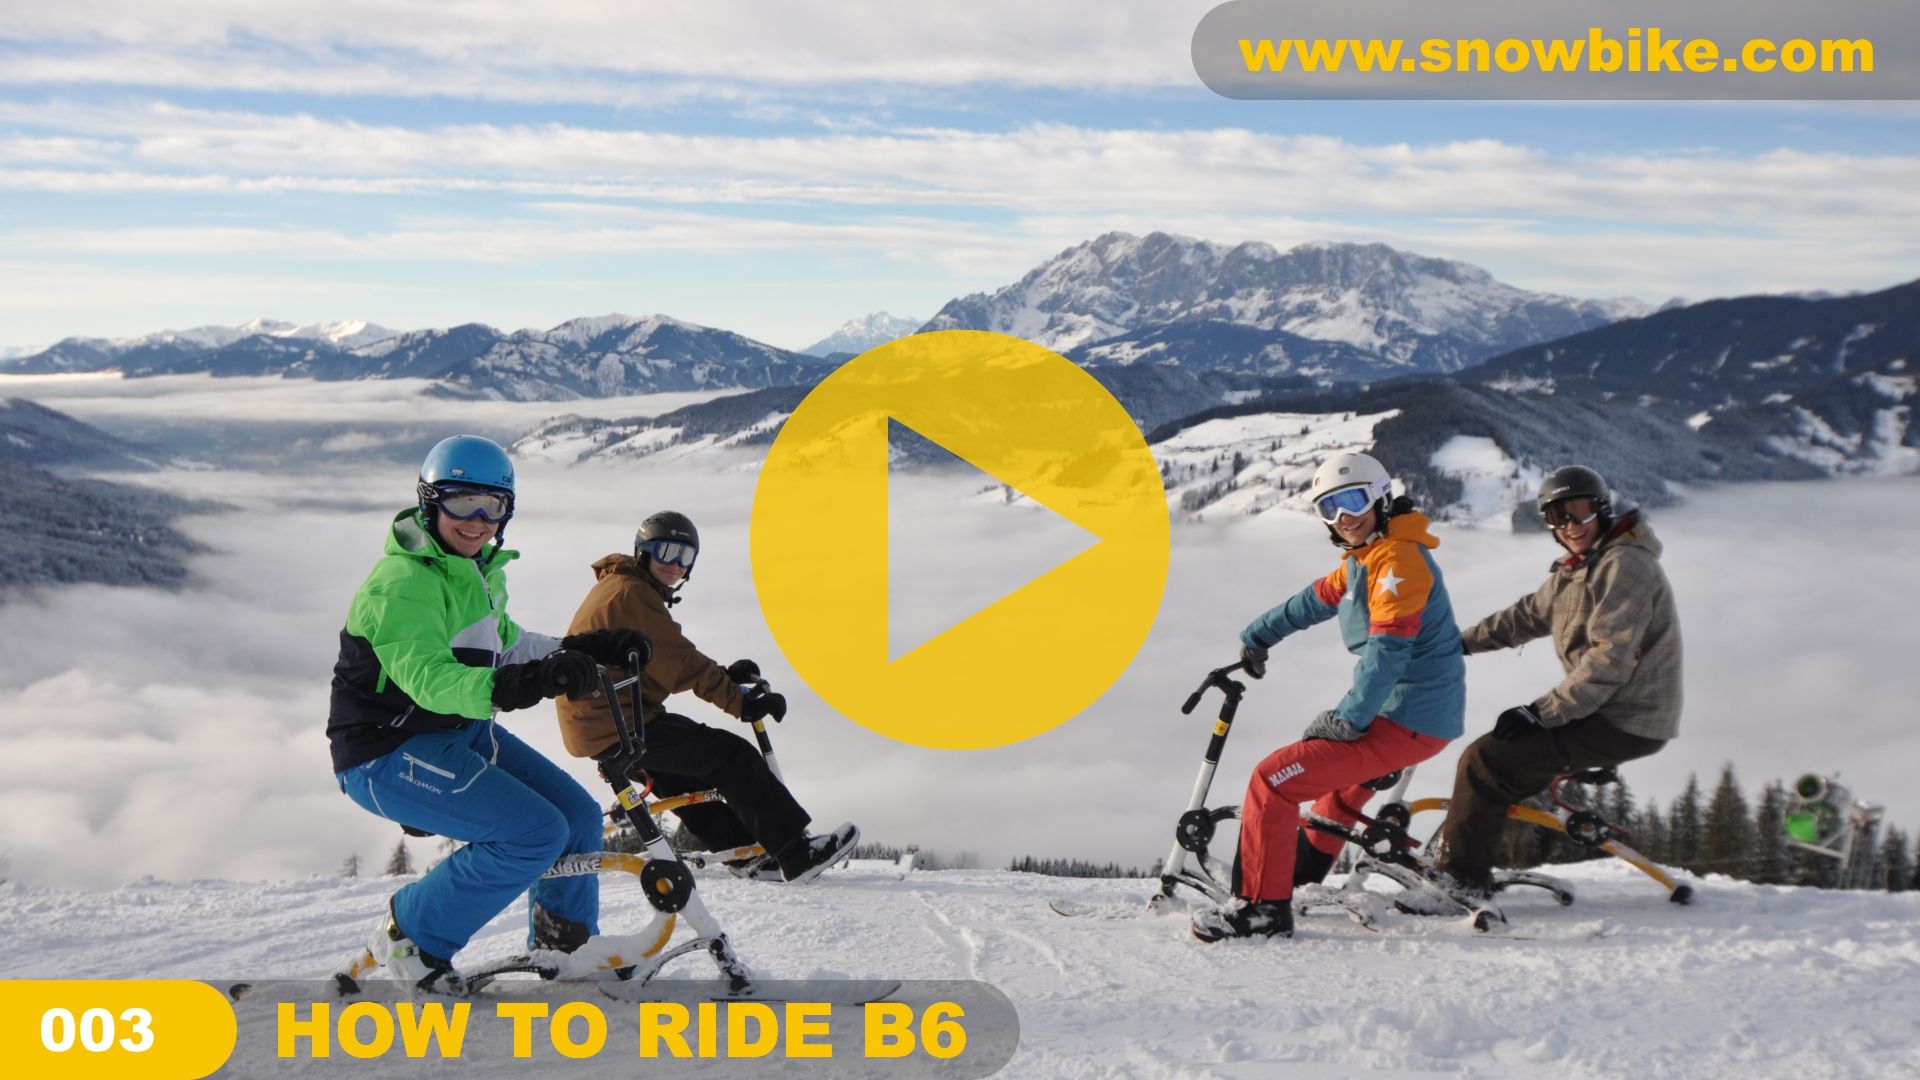 snowbike-basics-how-to-ride-b6-cover8808639C-40E0-9BB3-F59E-449B4D8F486E.jpg